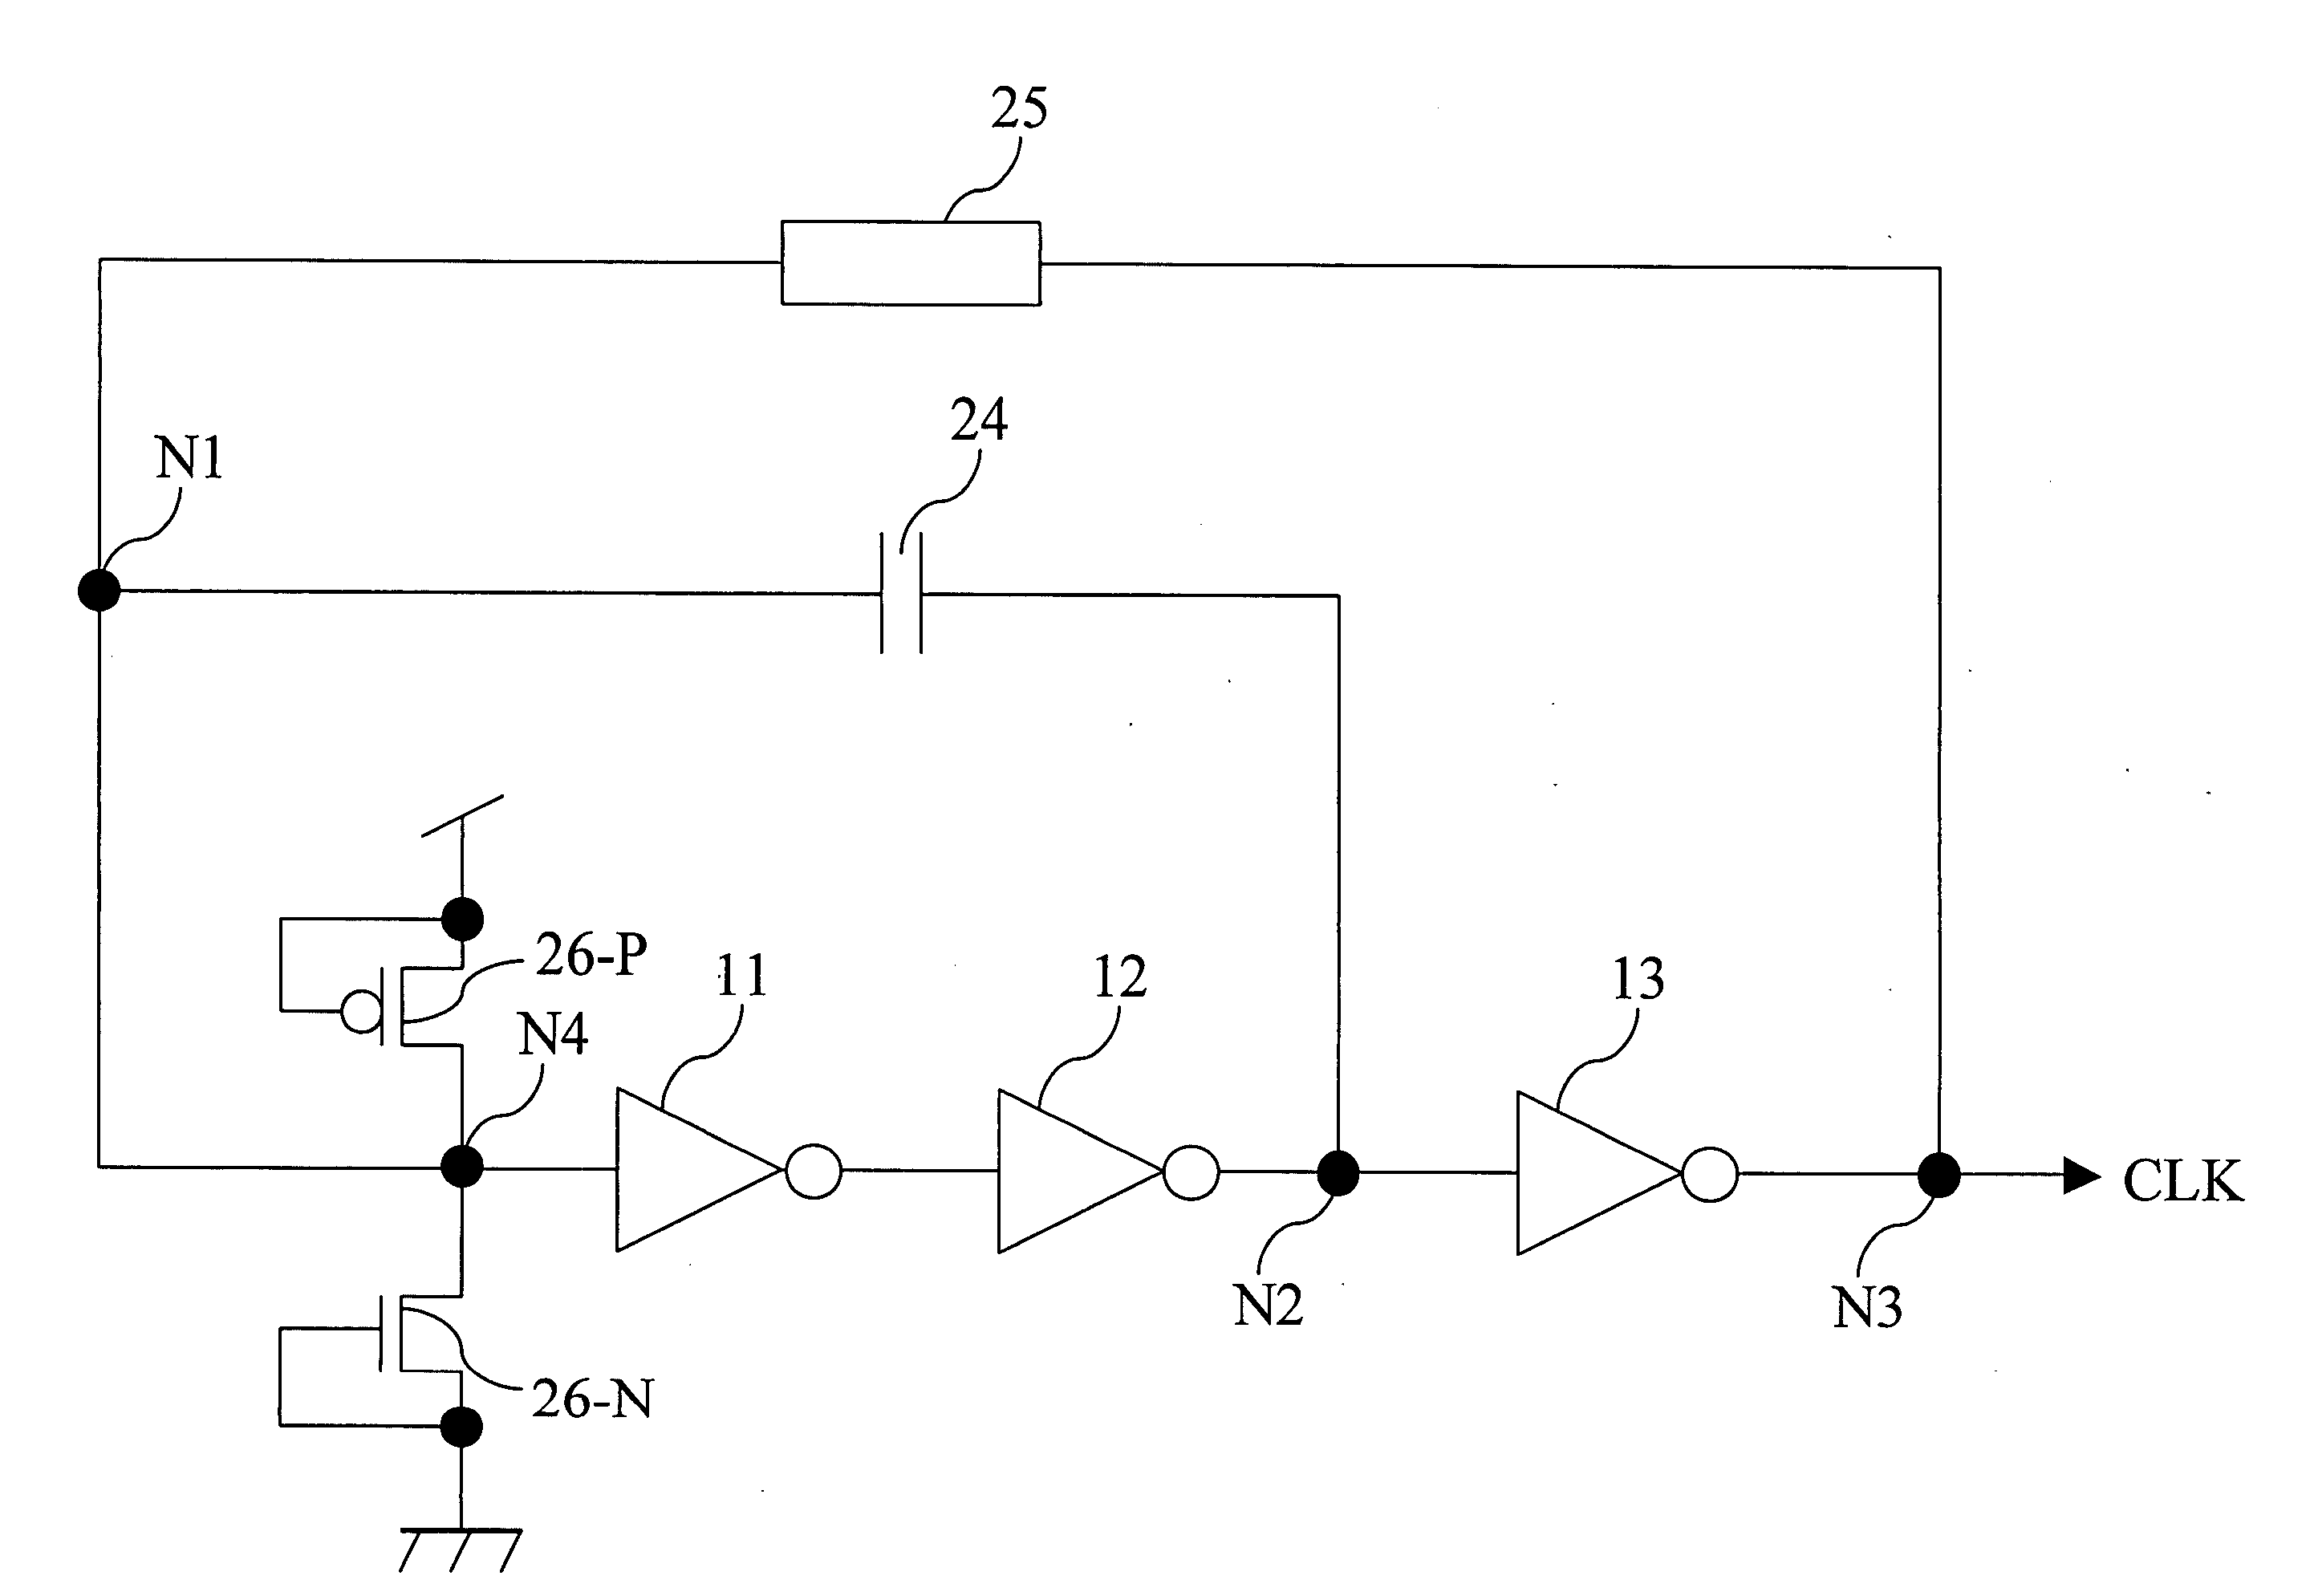 CR oscillation circuit